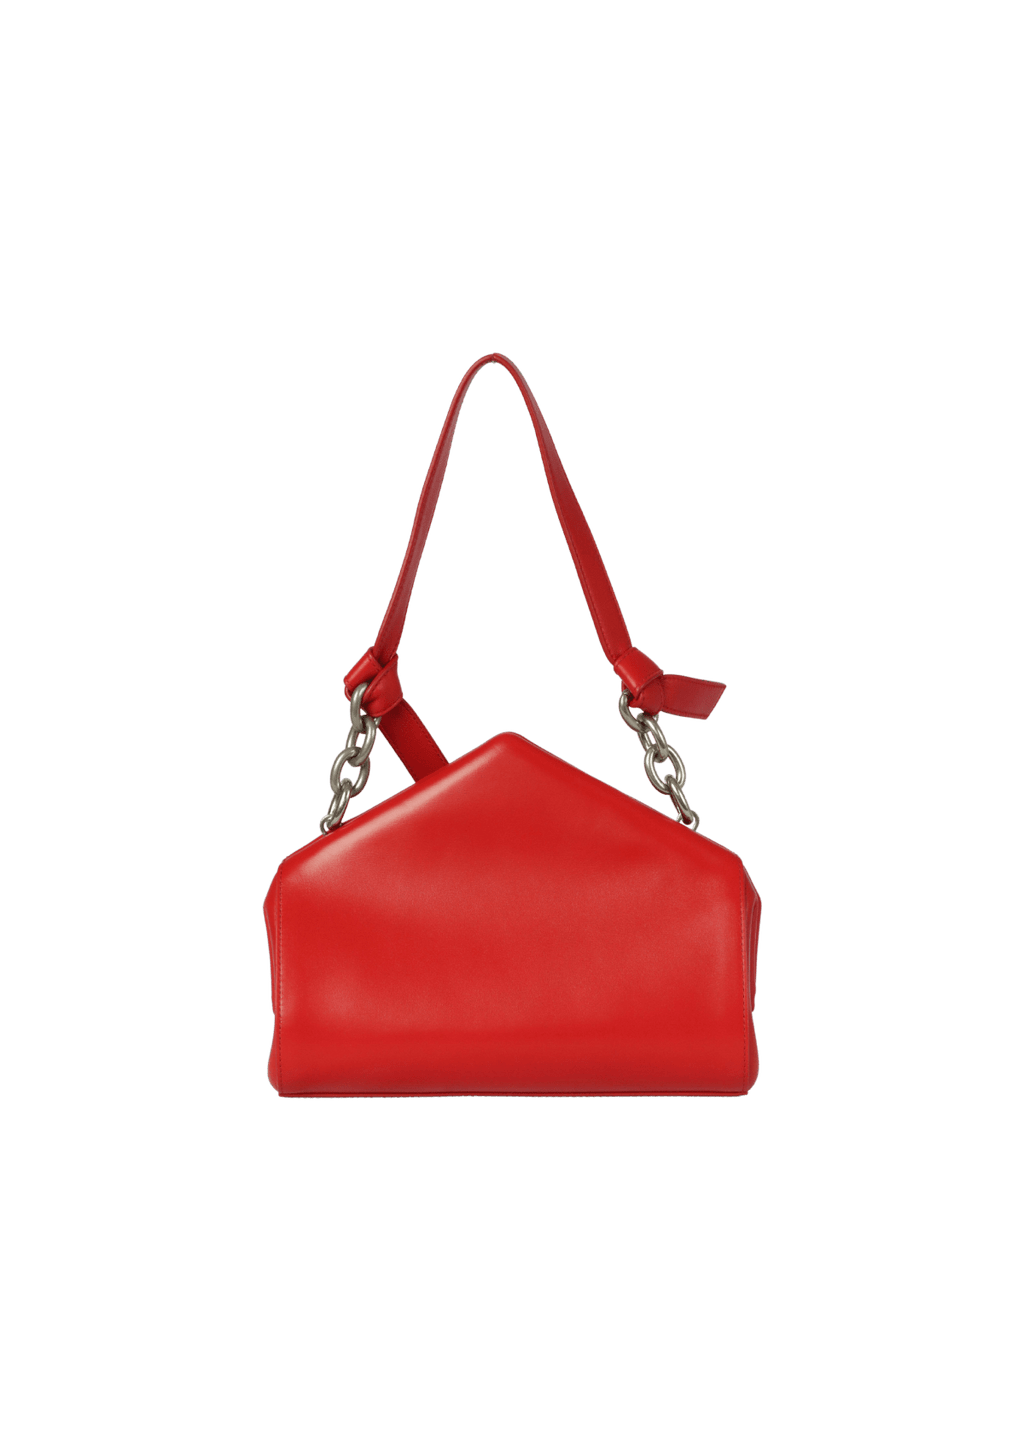 Bottega Veneta The Tip Shoulder Bag